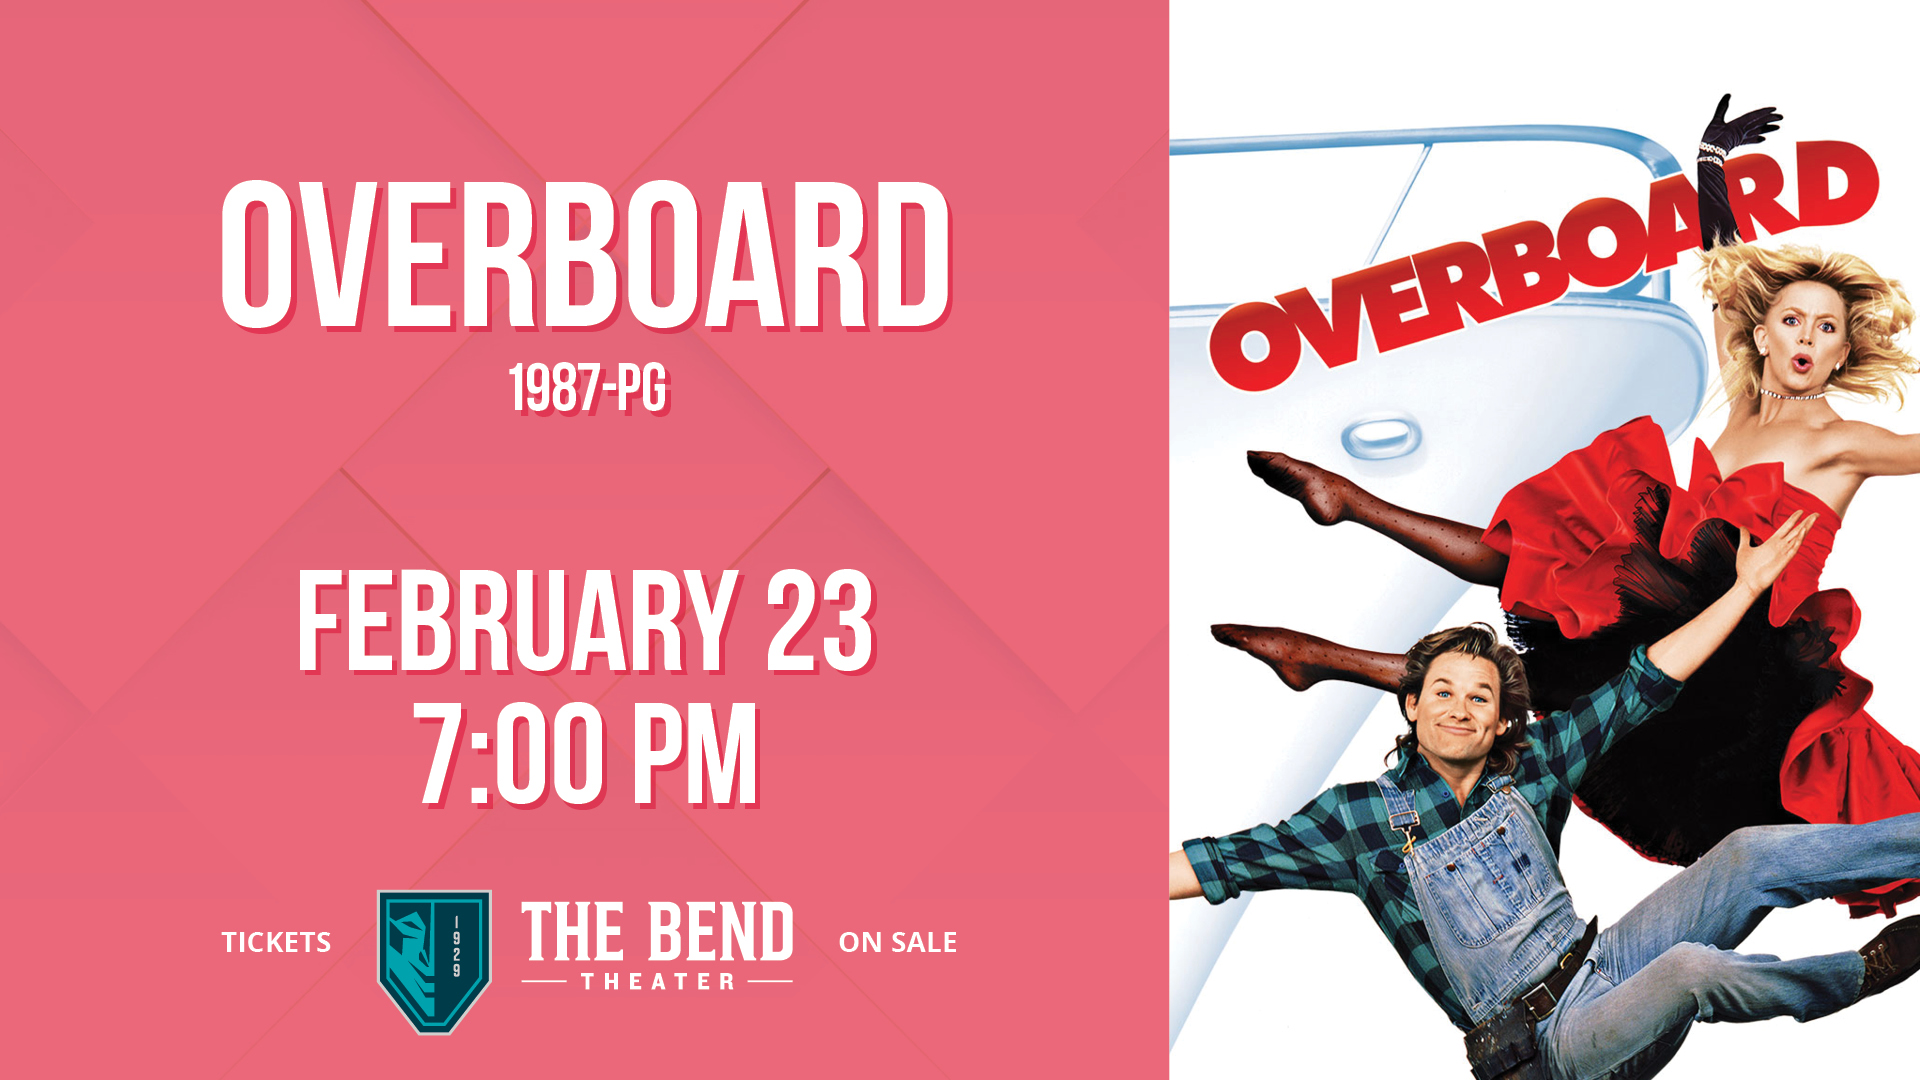 Overboard (1987 - PG)